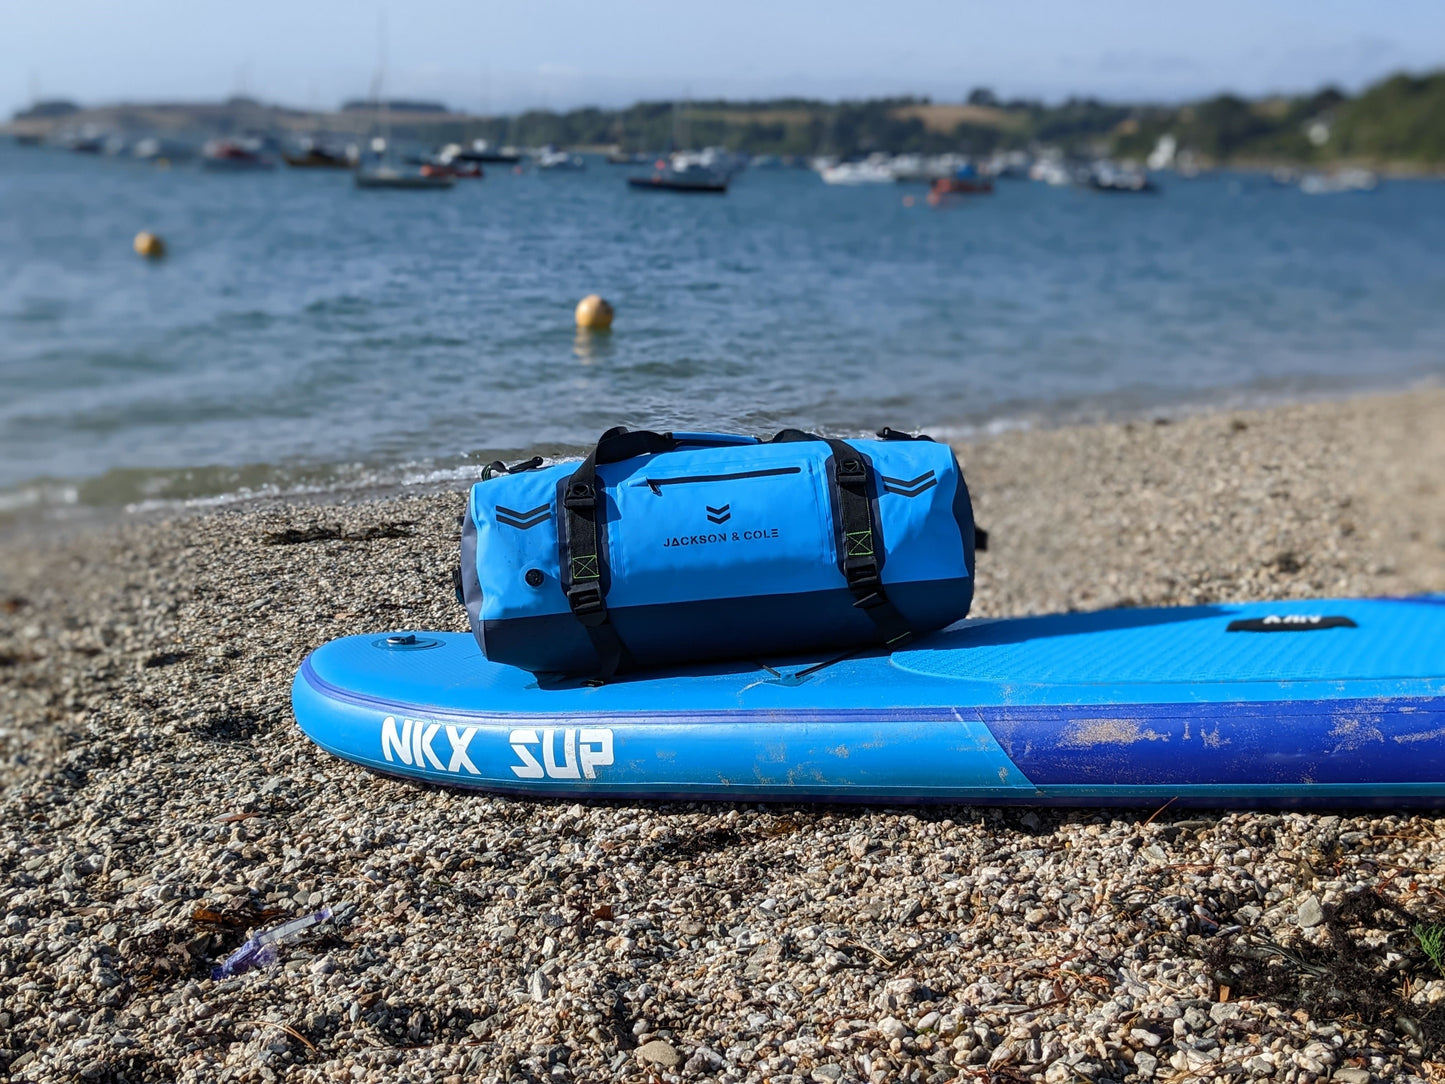 Waterproof duffel bag on paddle board